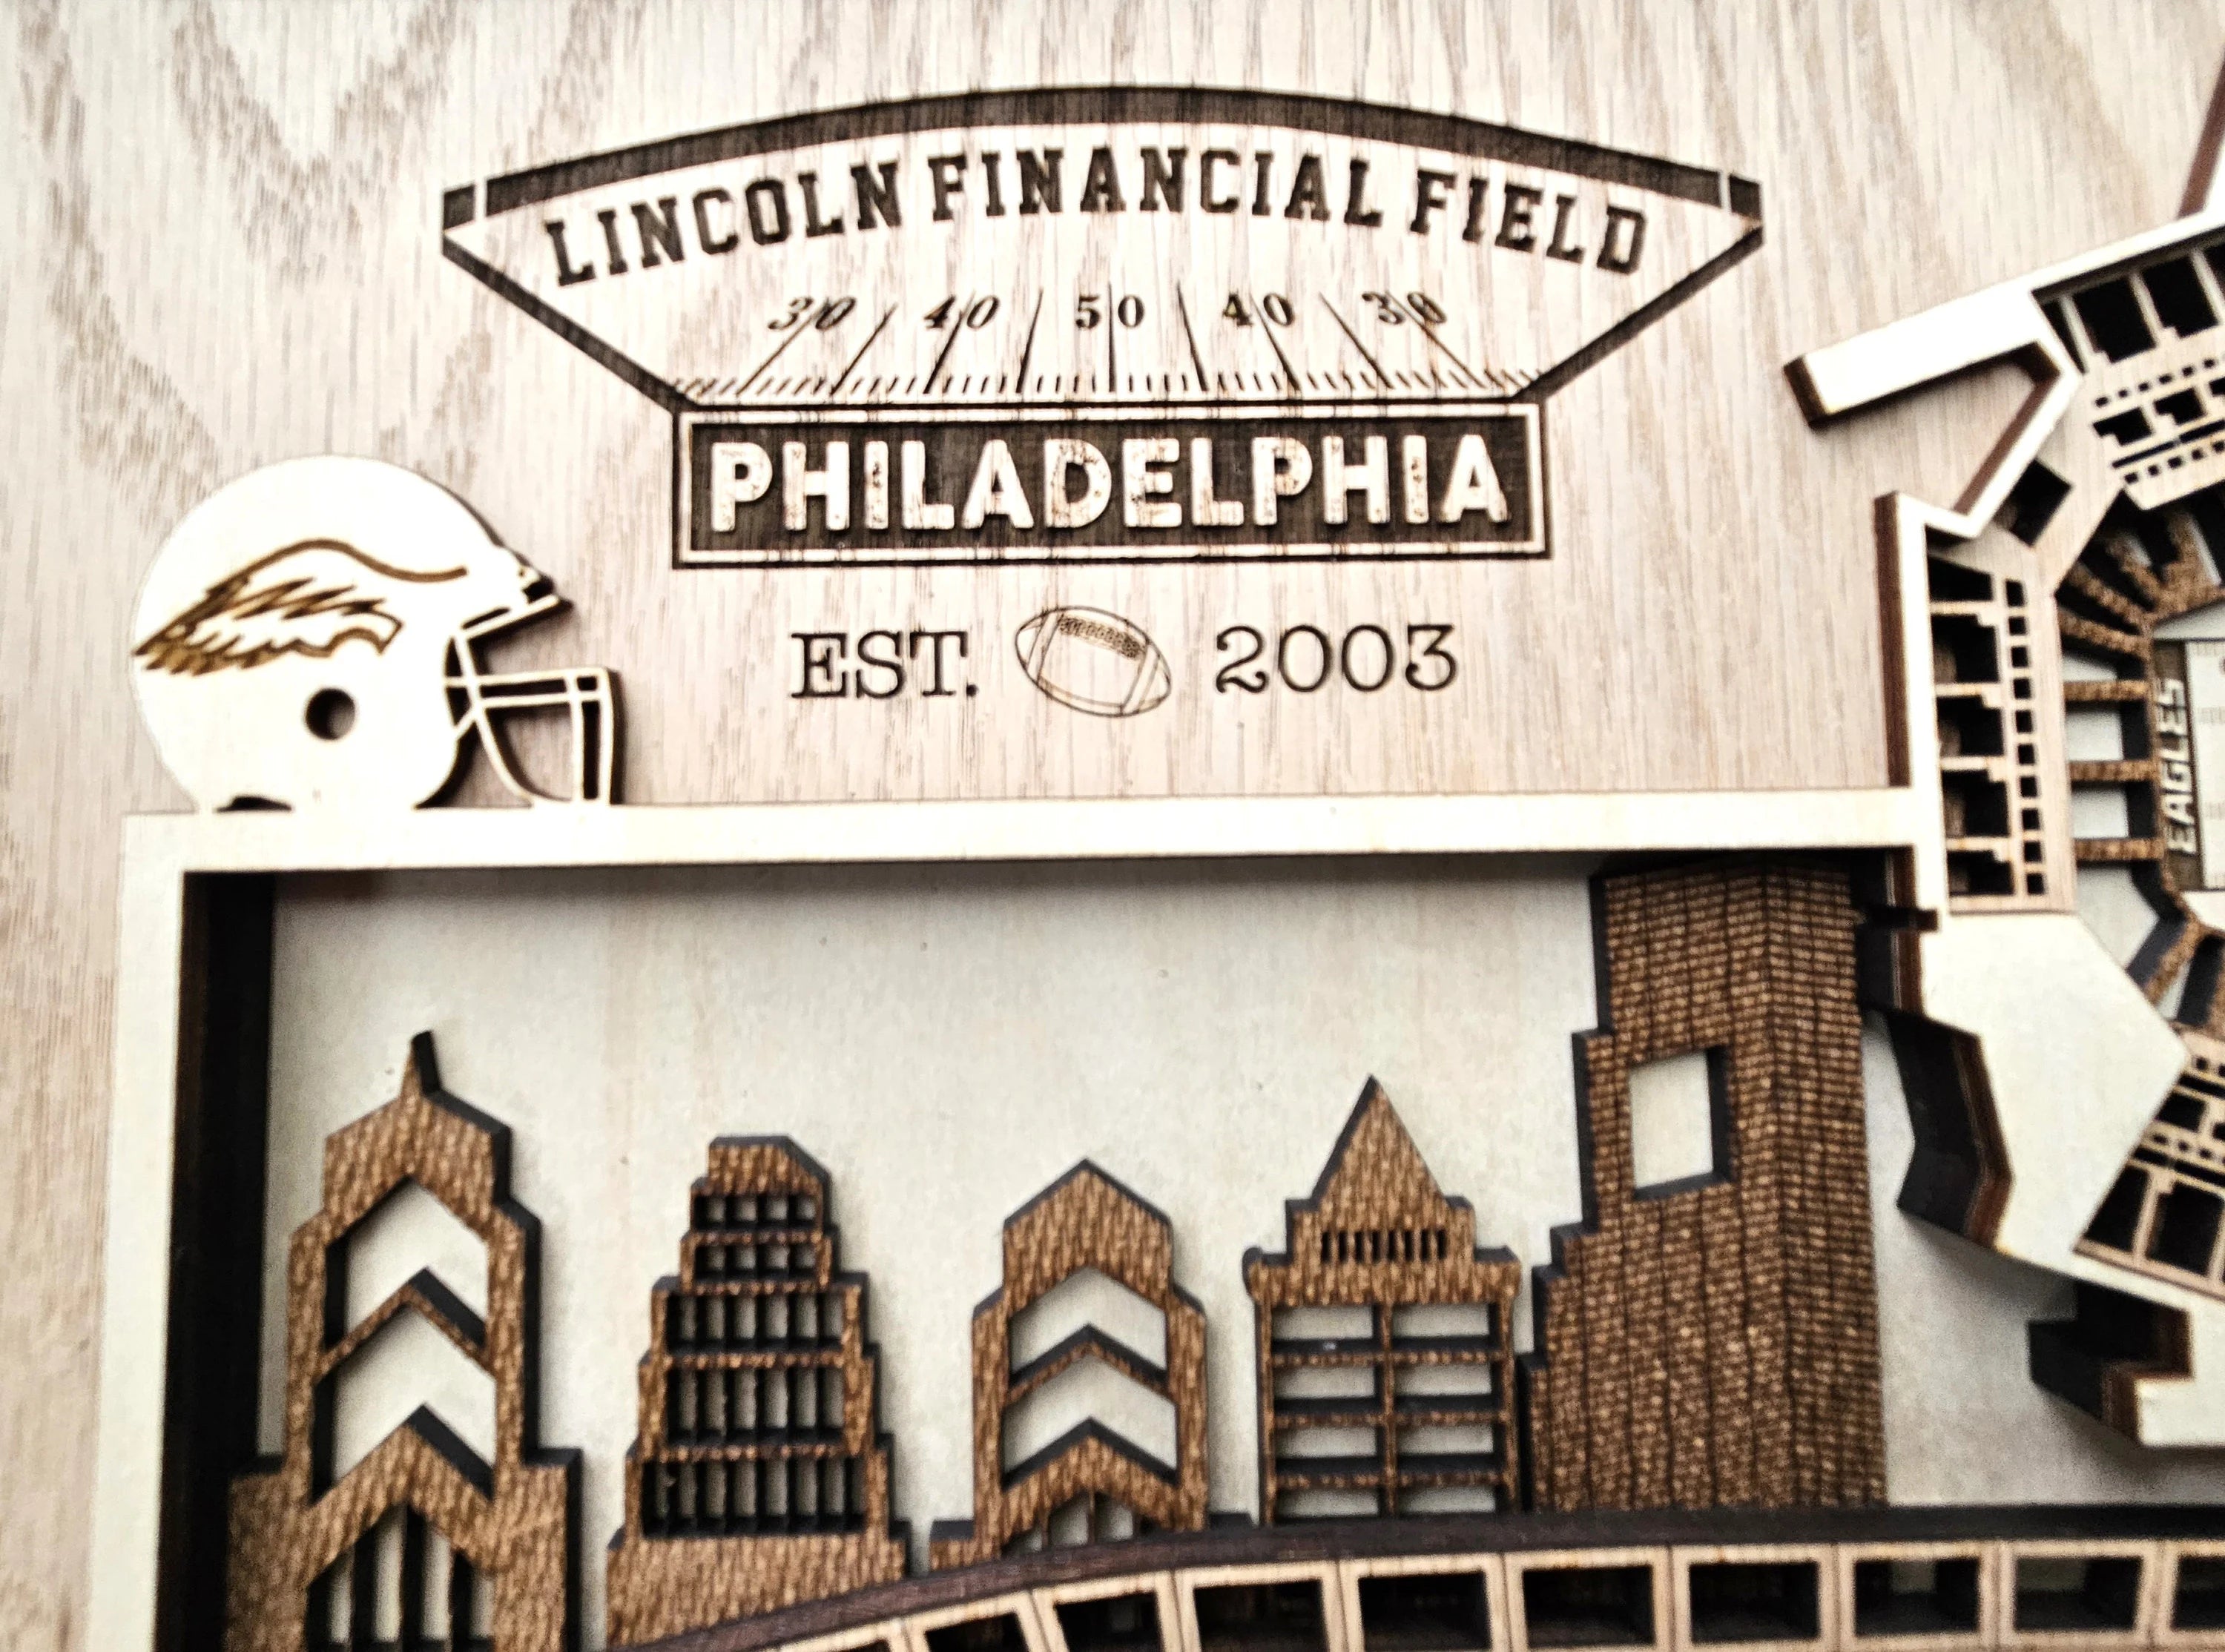 Lincoln Financial Field - Home of Philadelphia Eagles Football